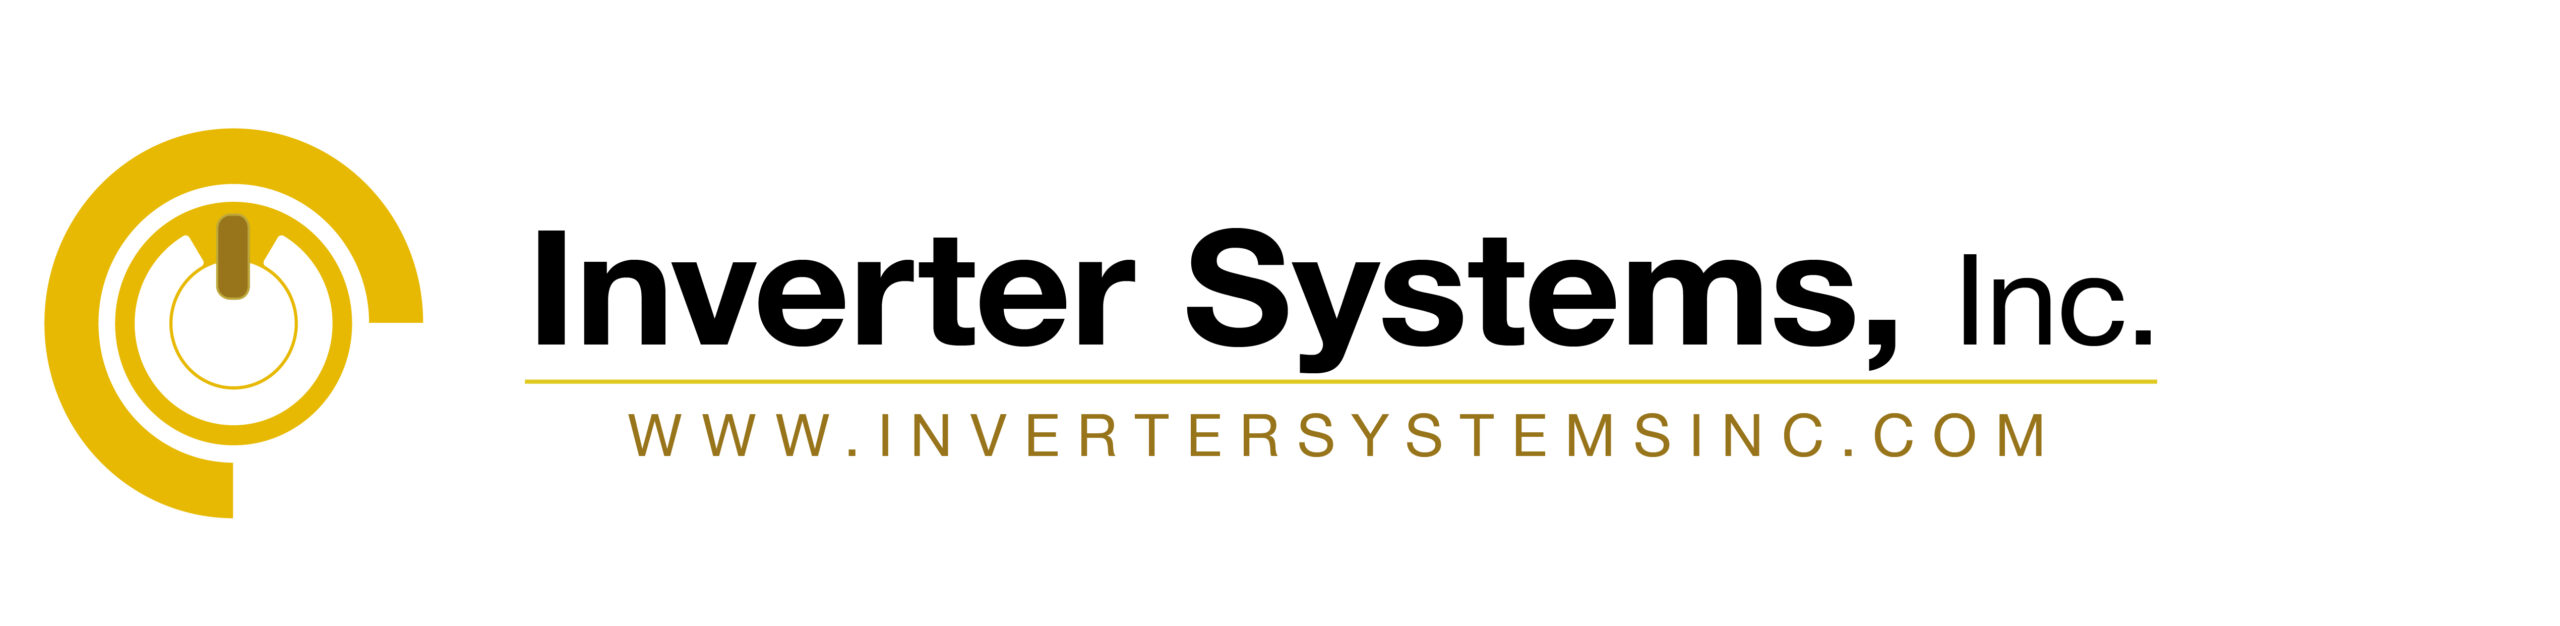 Inverter Systems Inc.